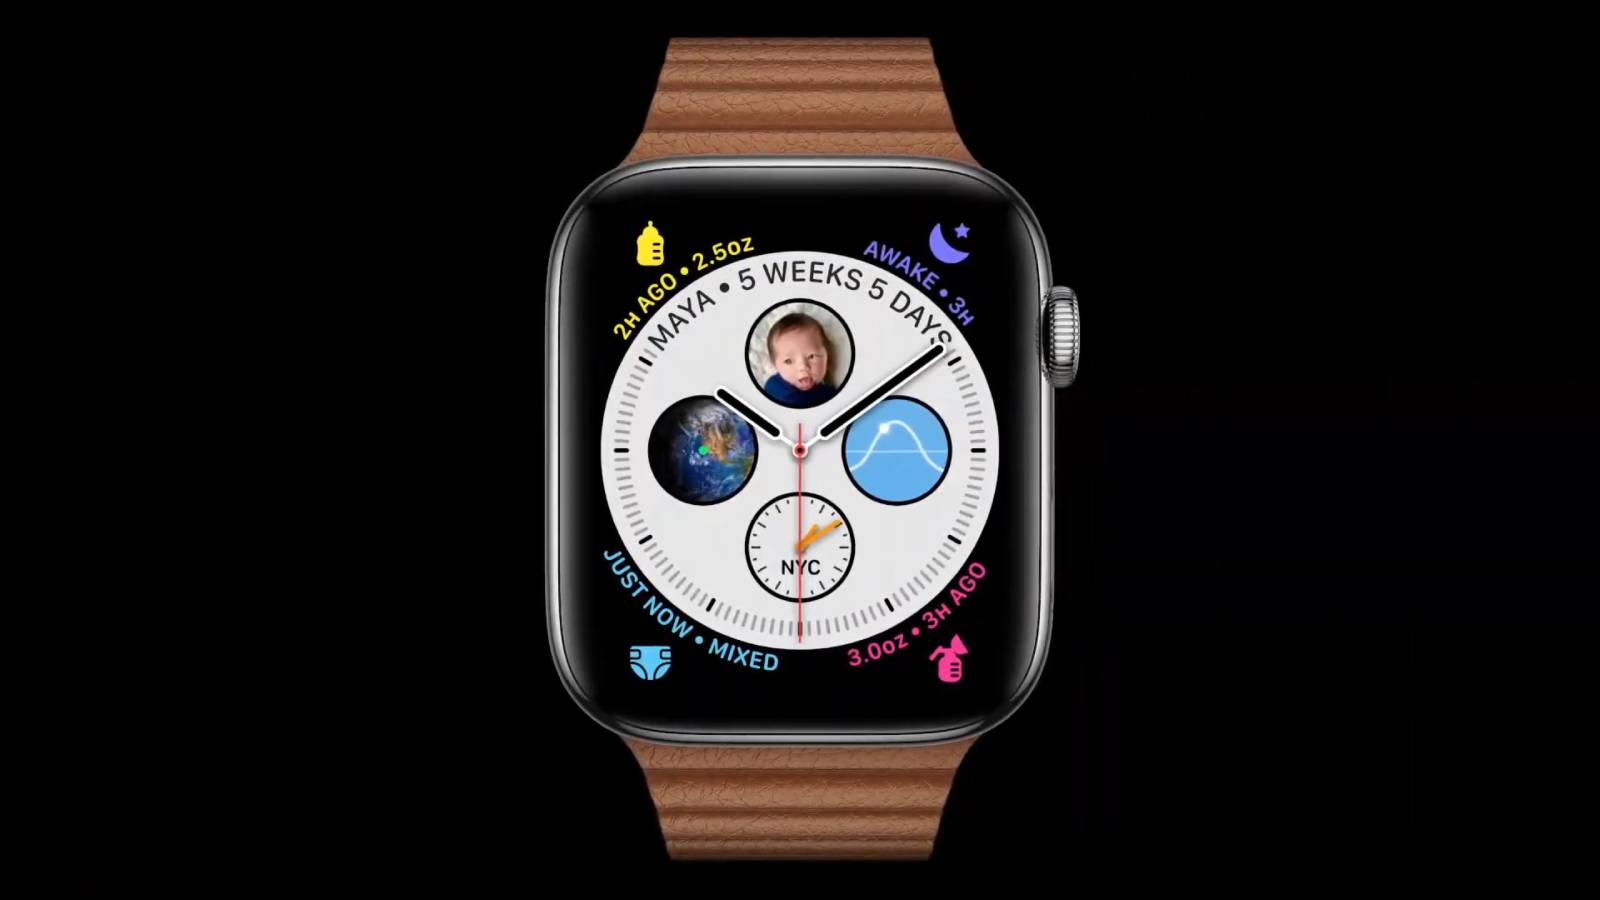 apple watch s4 tips